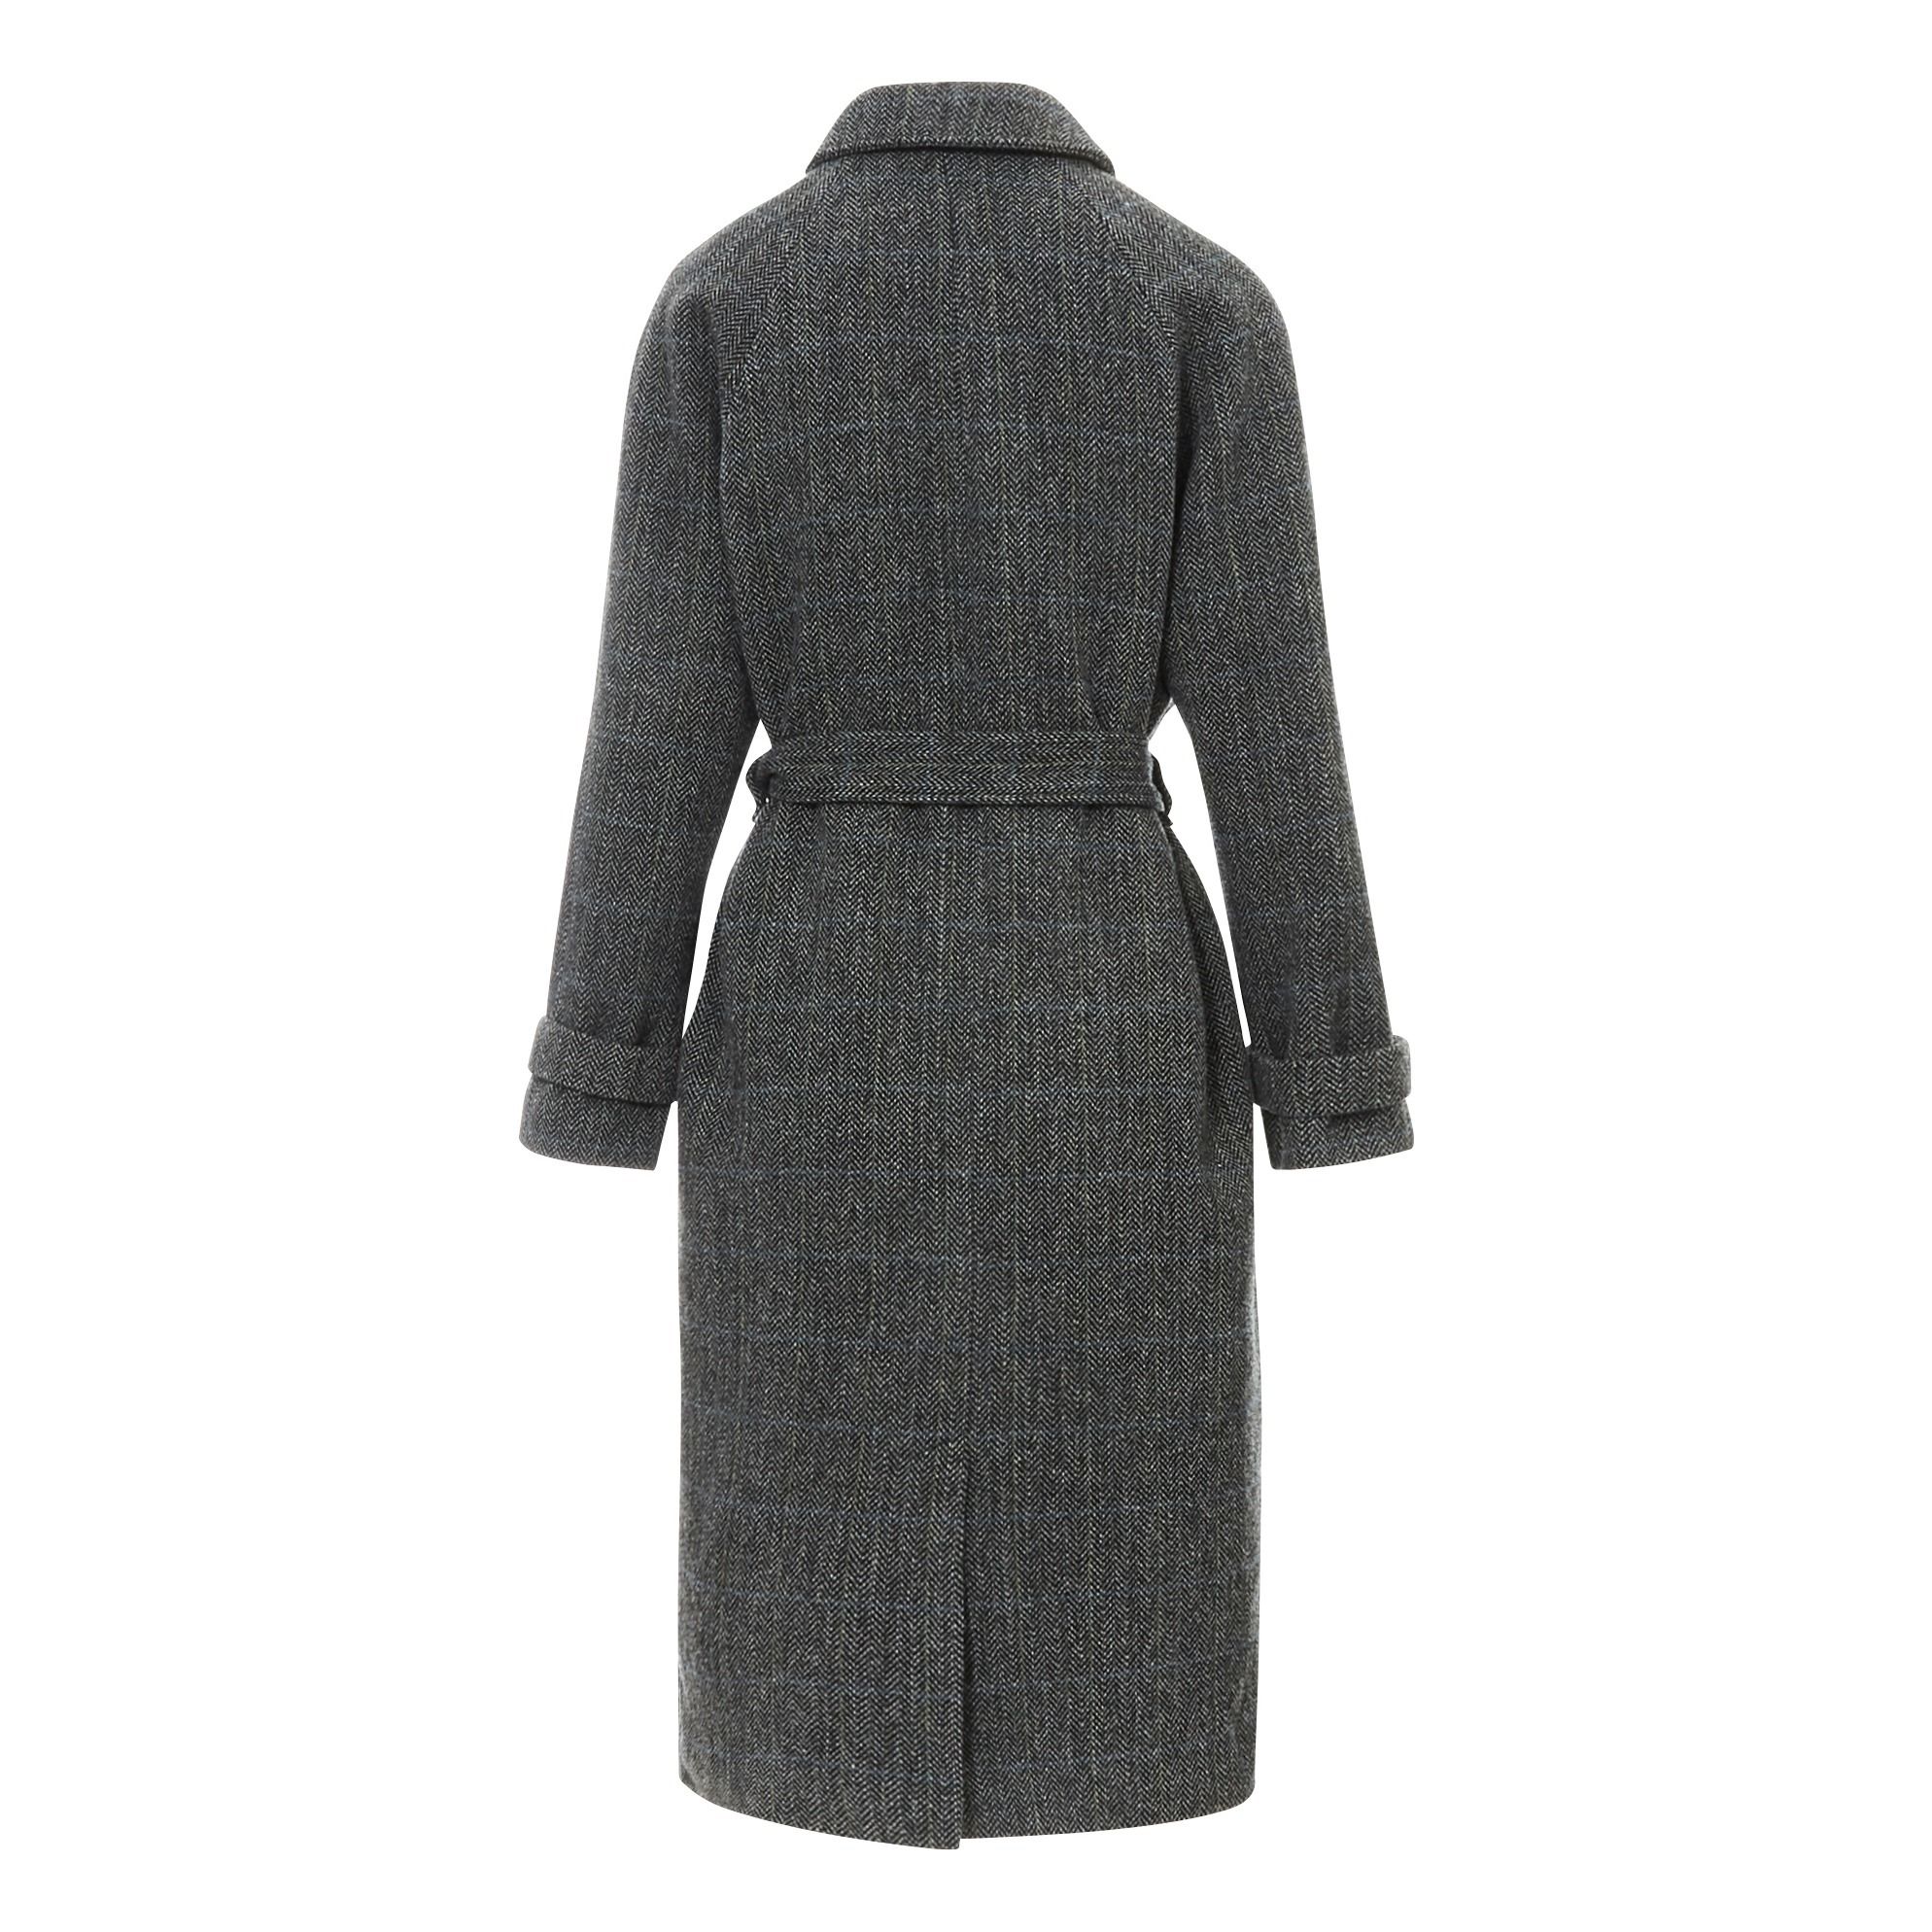 Roger Coat Charcoal grey Suzie Winkle Fashion Adult